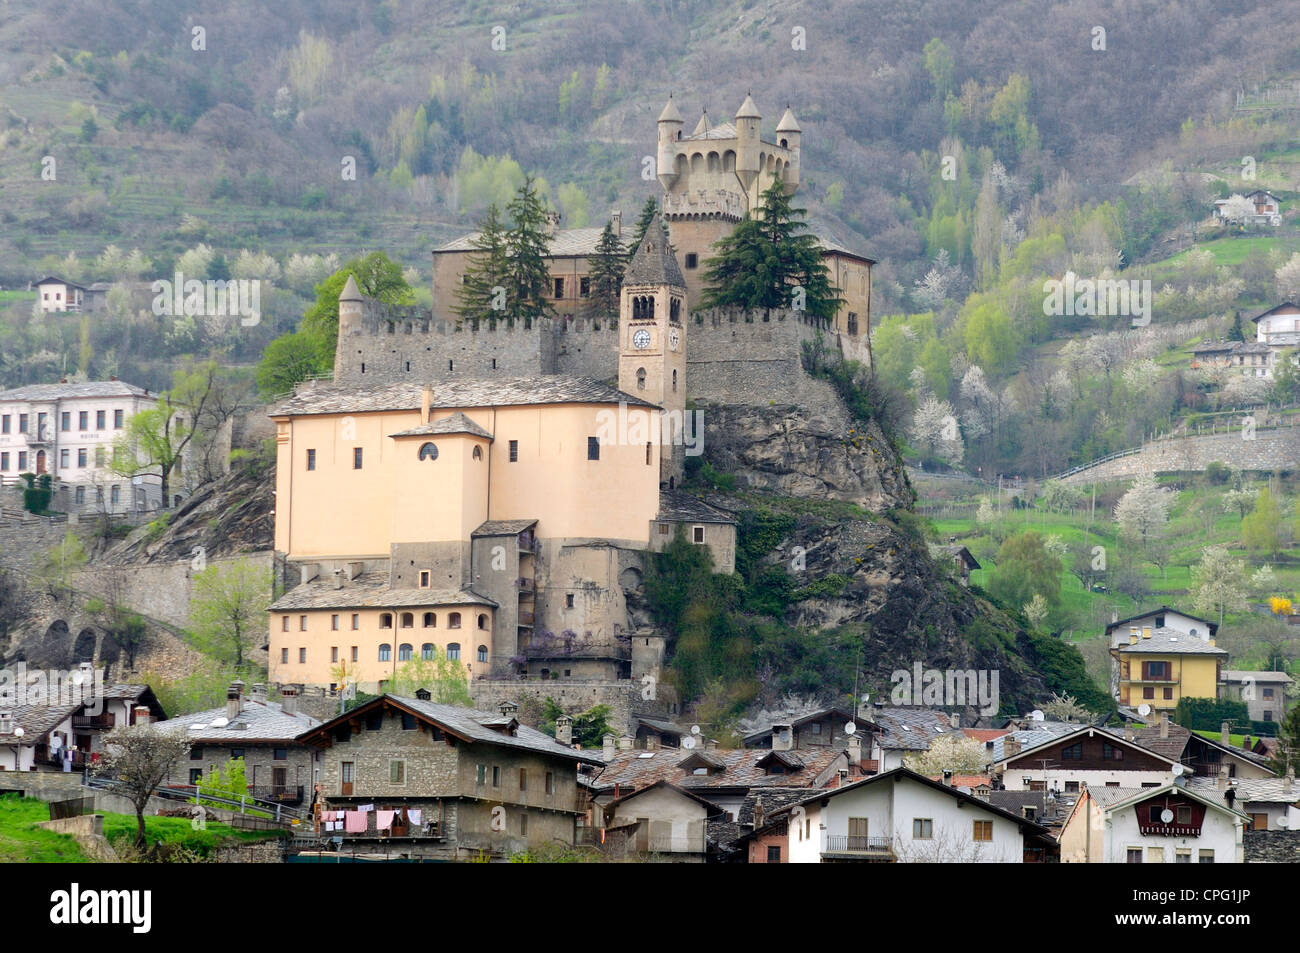 Italy, Aosta Valley, Saint-Pierre, Castle Stock Photo